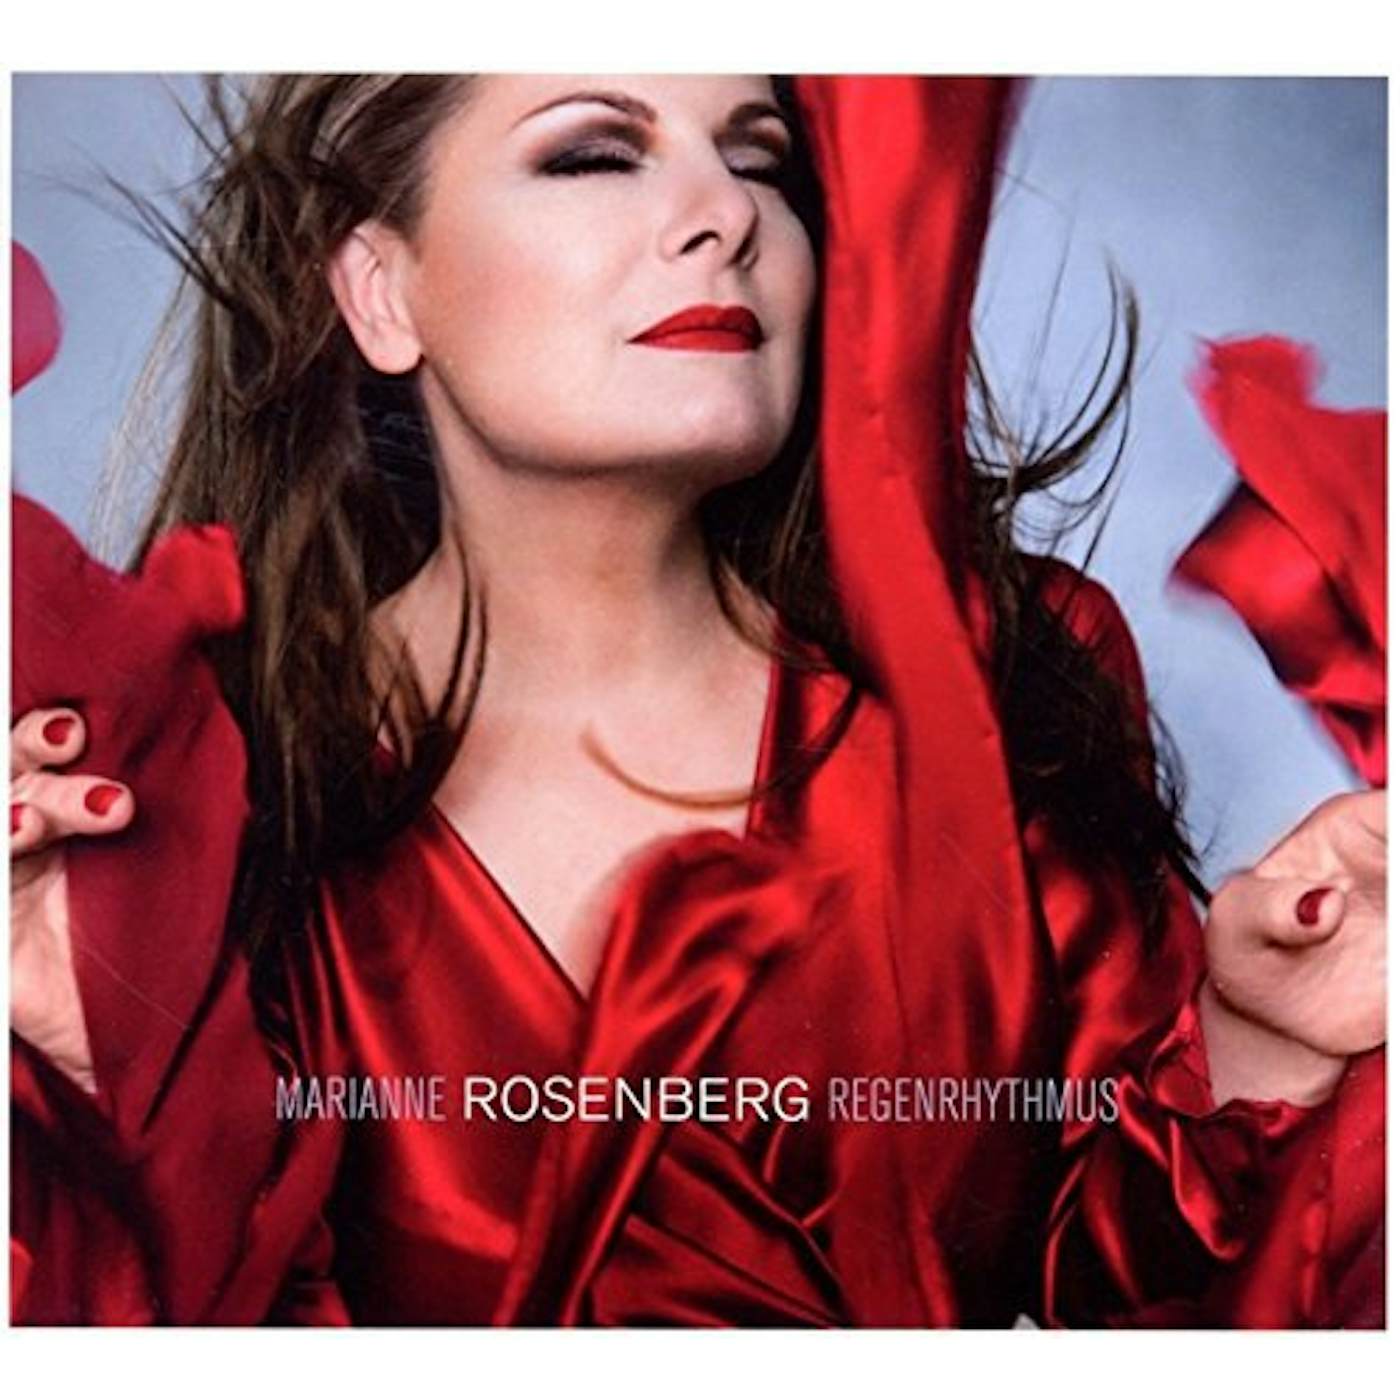 Marianne Rosenberg Regenrhythmus Vinyl Record